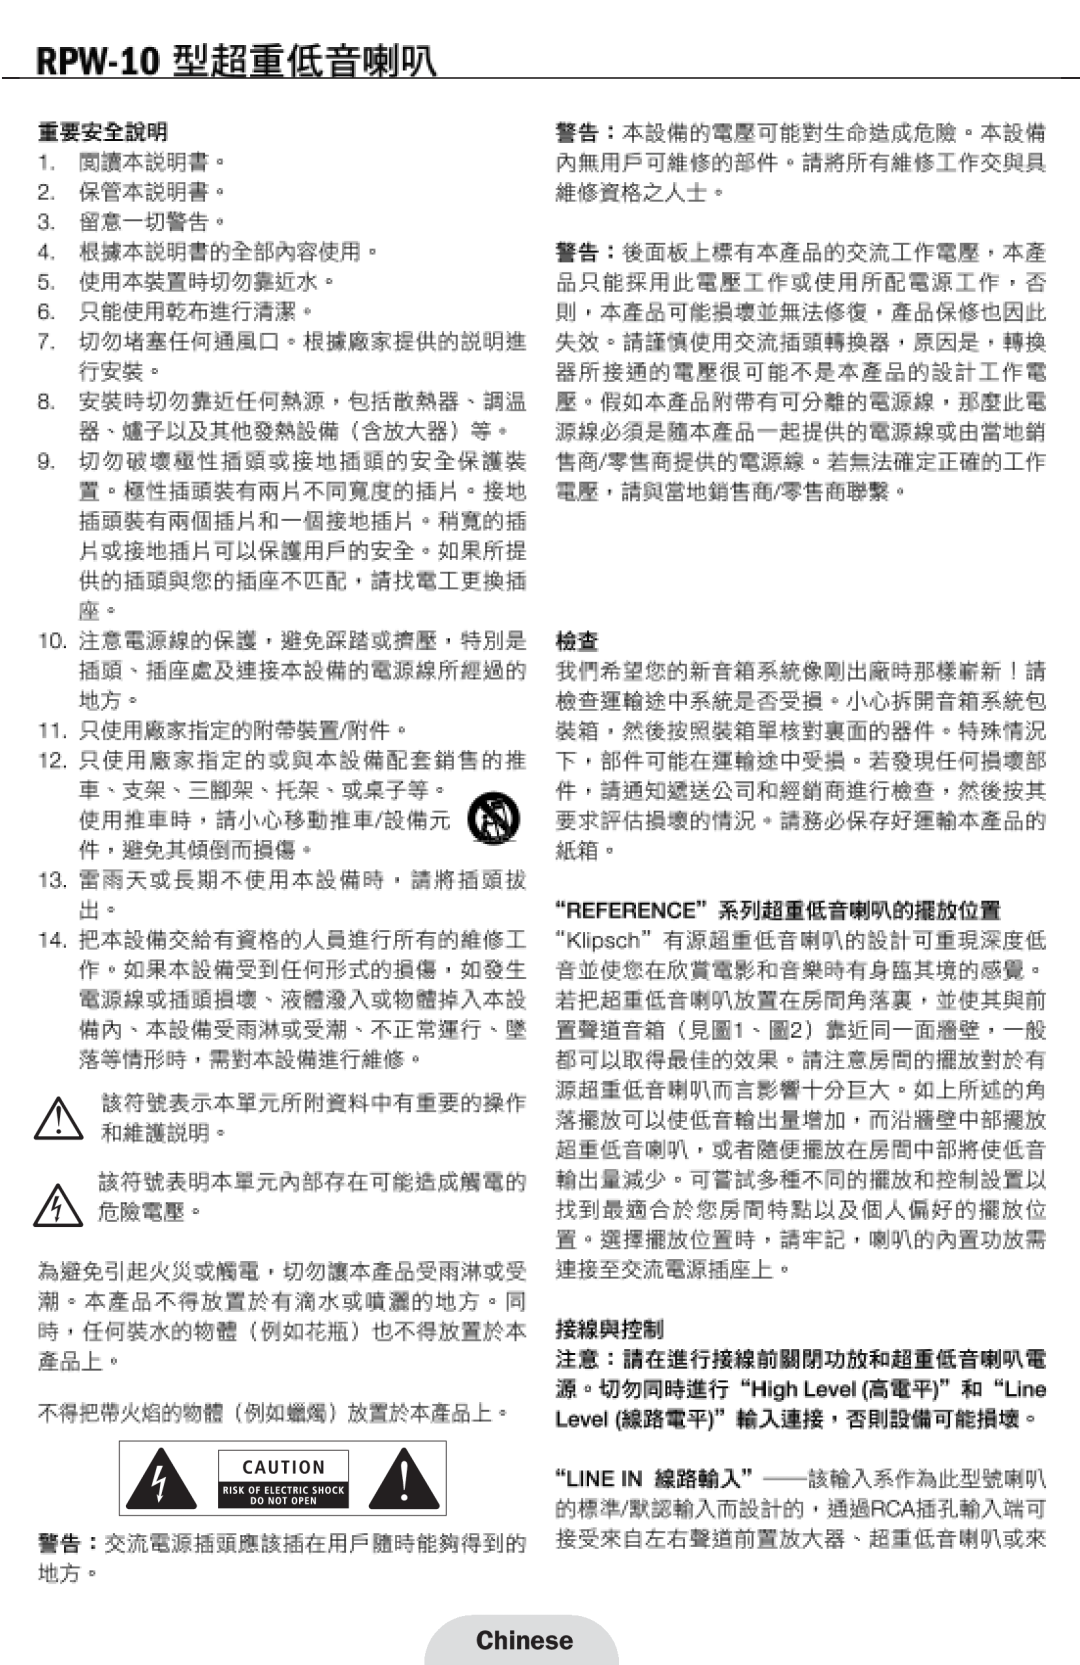 Klipsch RPW-10 manual Chinese 